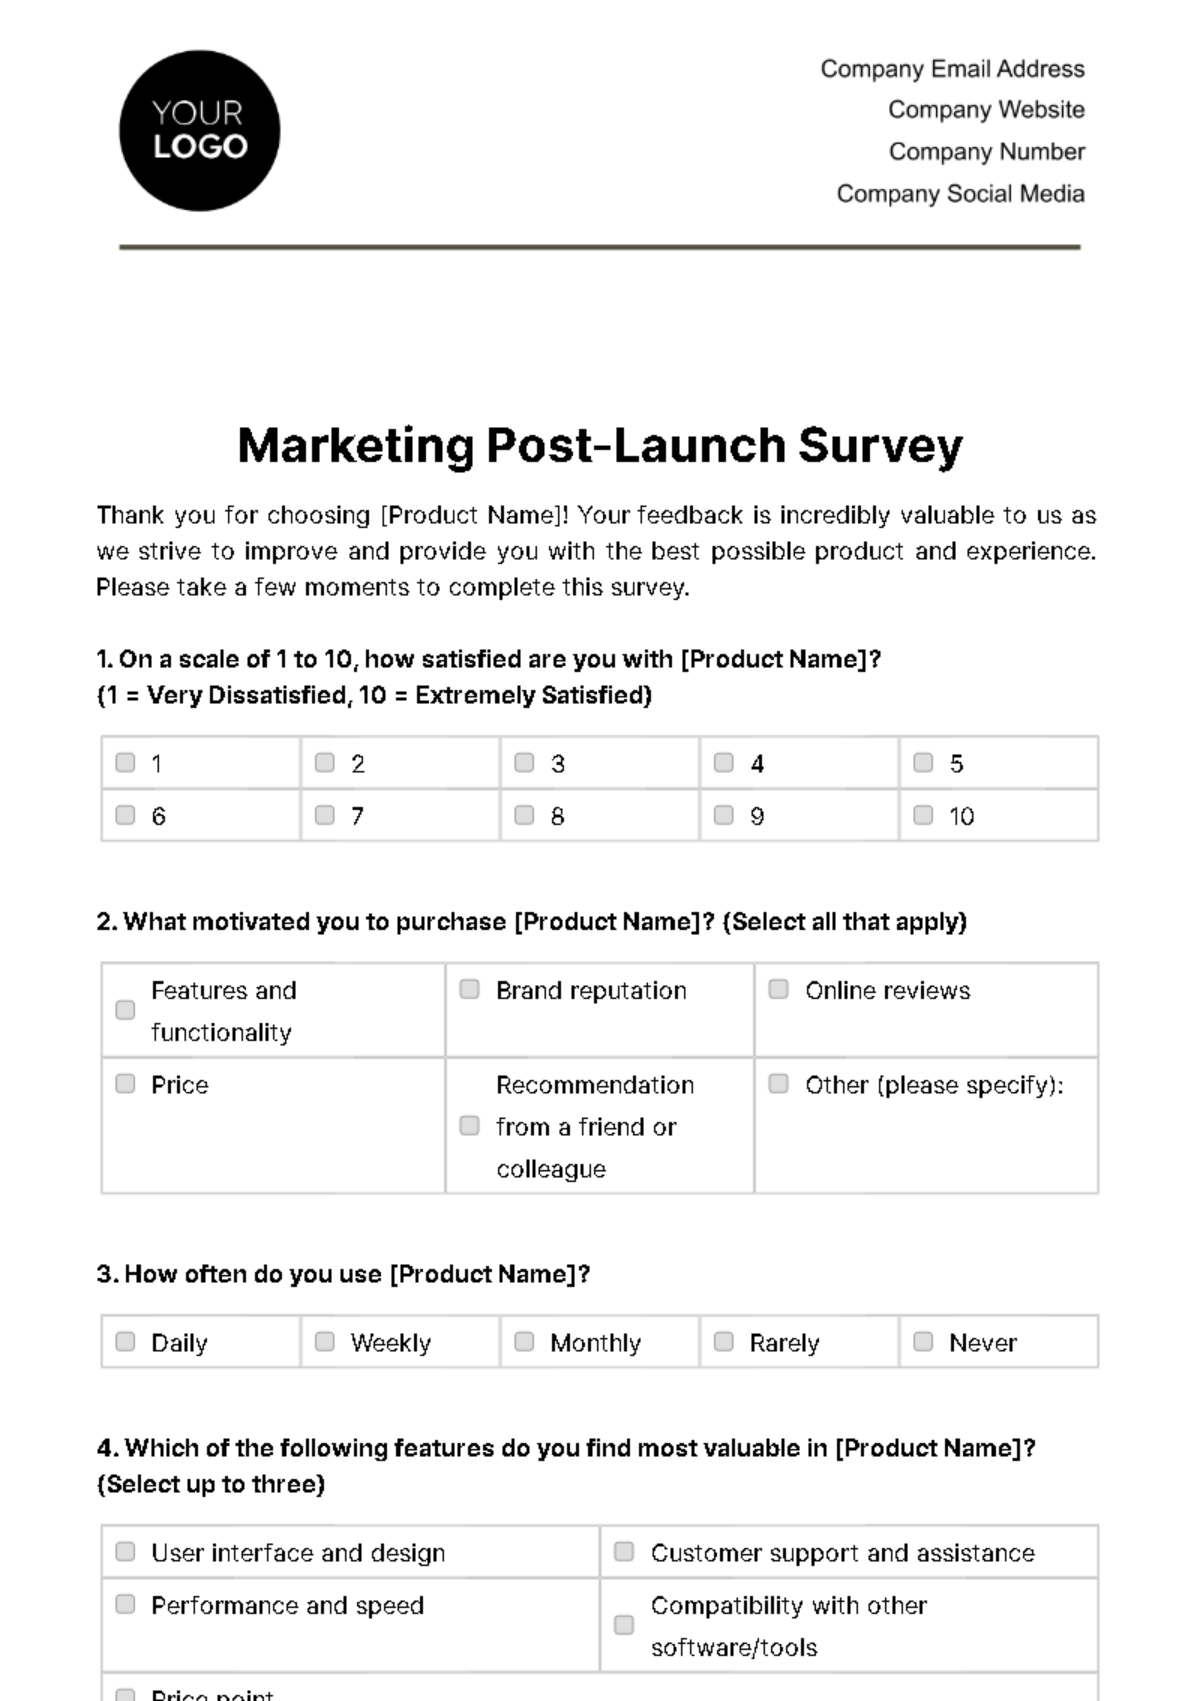 Free Marketing Post-Launch Survey Template